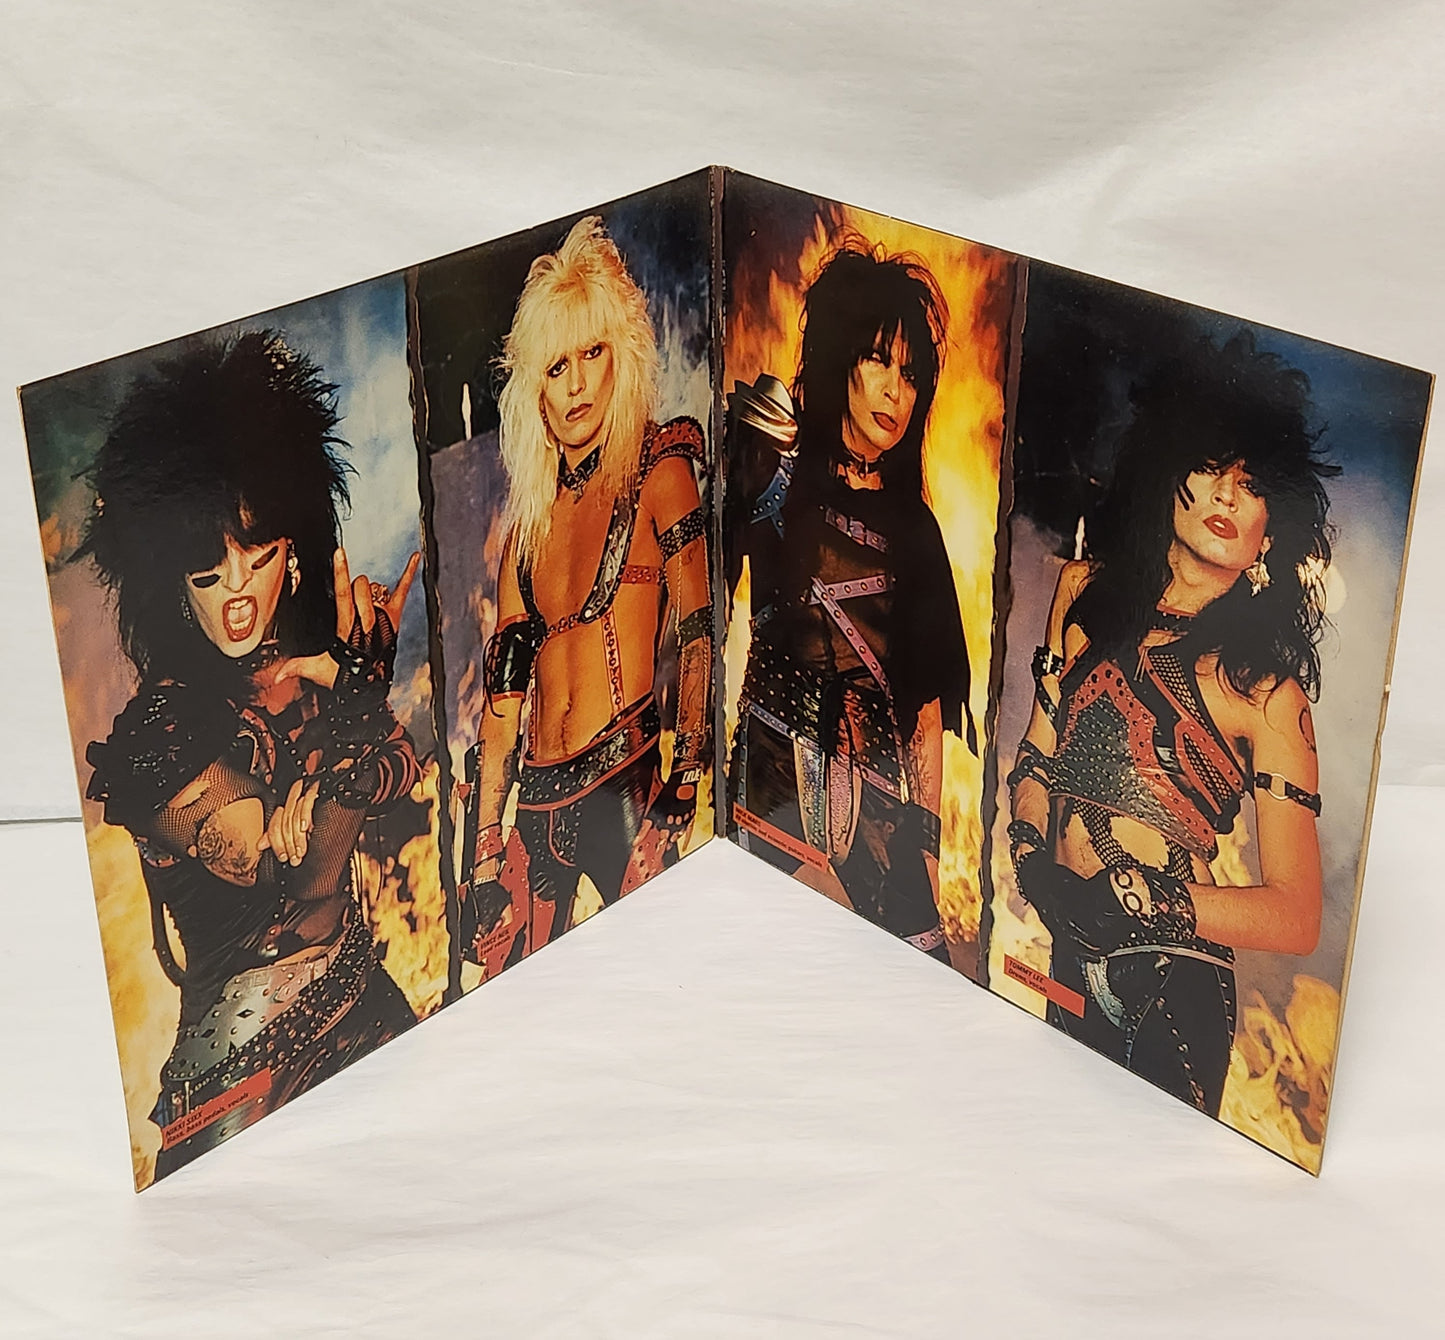 Motley Crue Promo "Shout At The Devil" 1983 Heavy Metal Hard Rock Record Album